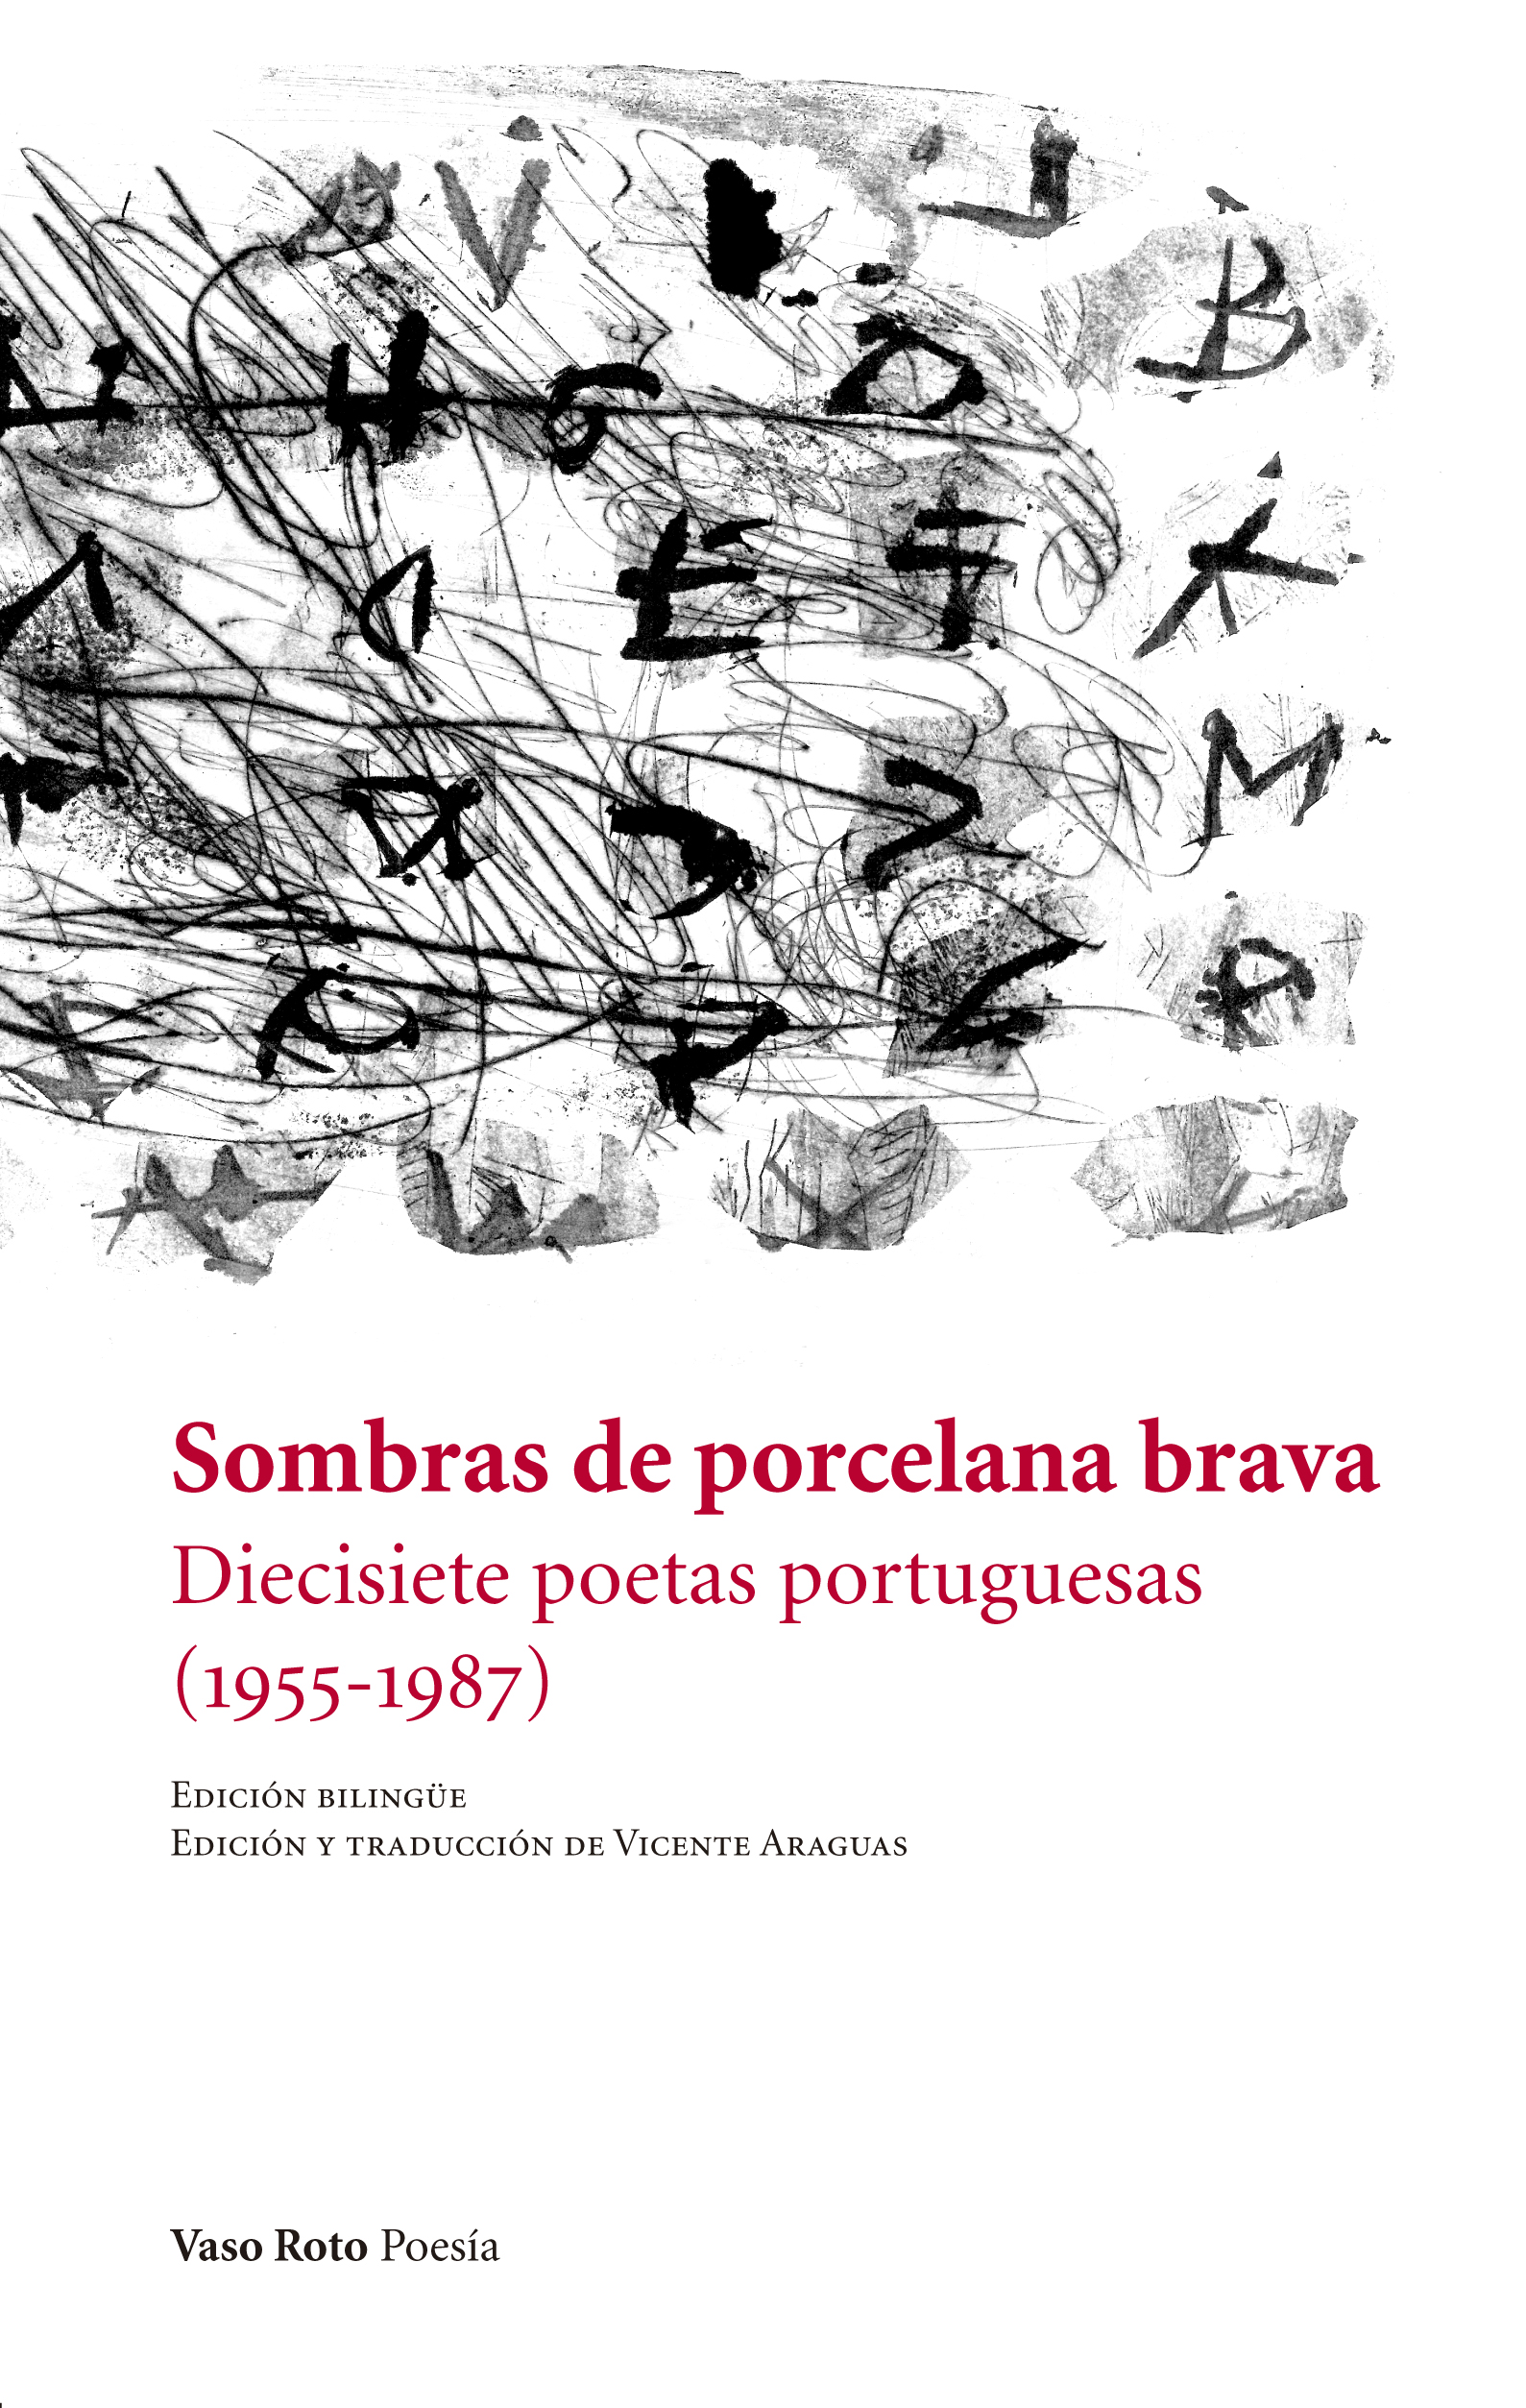 Sombras de porcelana brava «Diecisiete poetas portuguesas (1955-1987)»